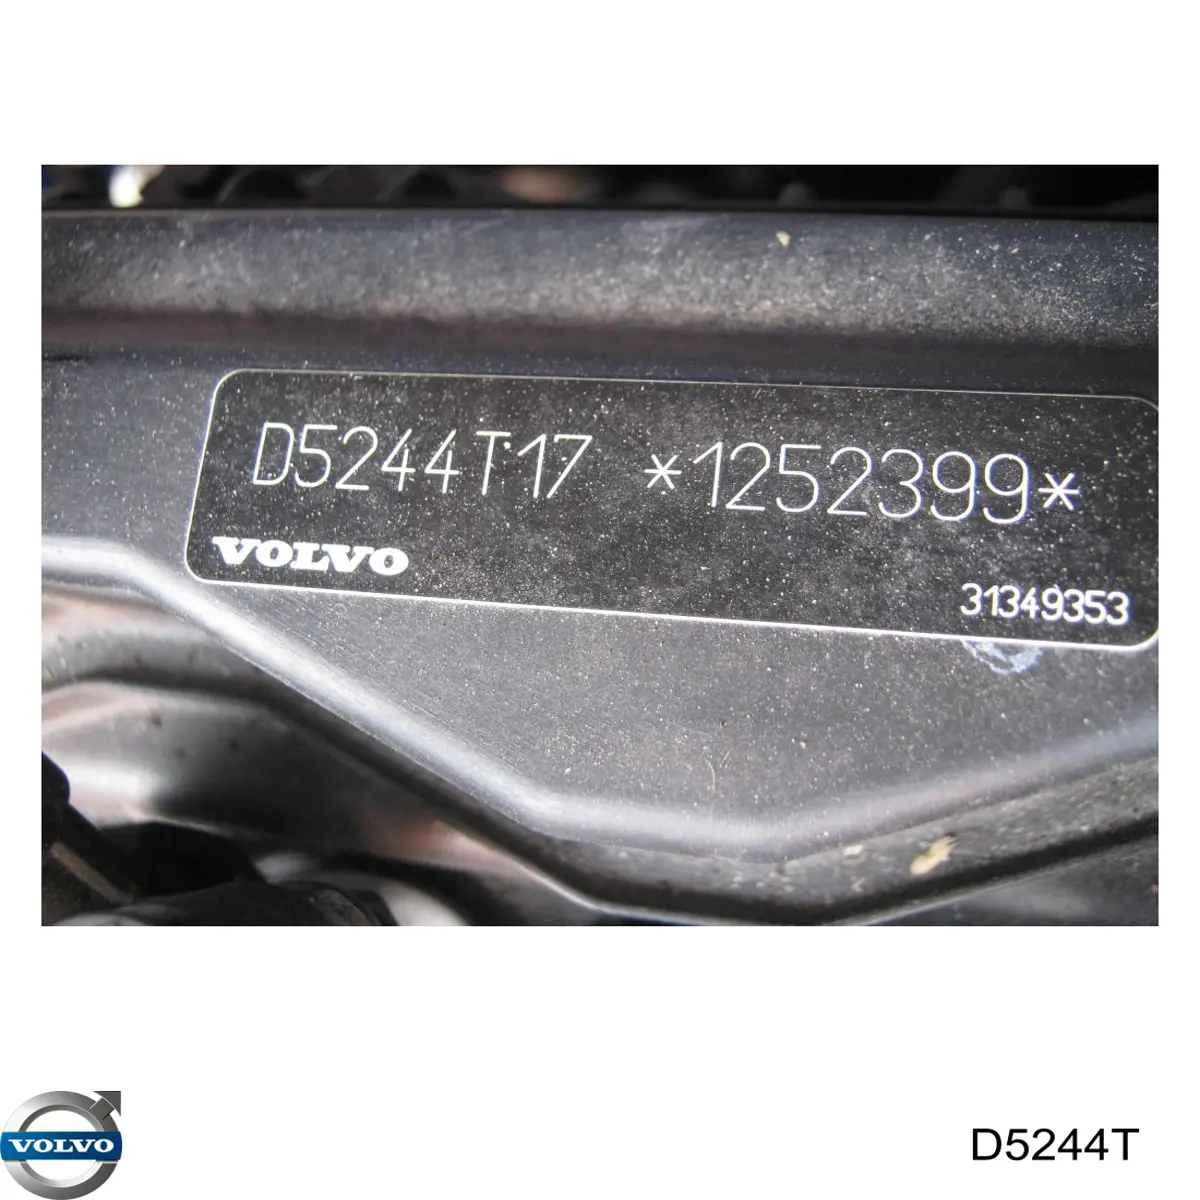 D5244T Volvo motor montado